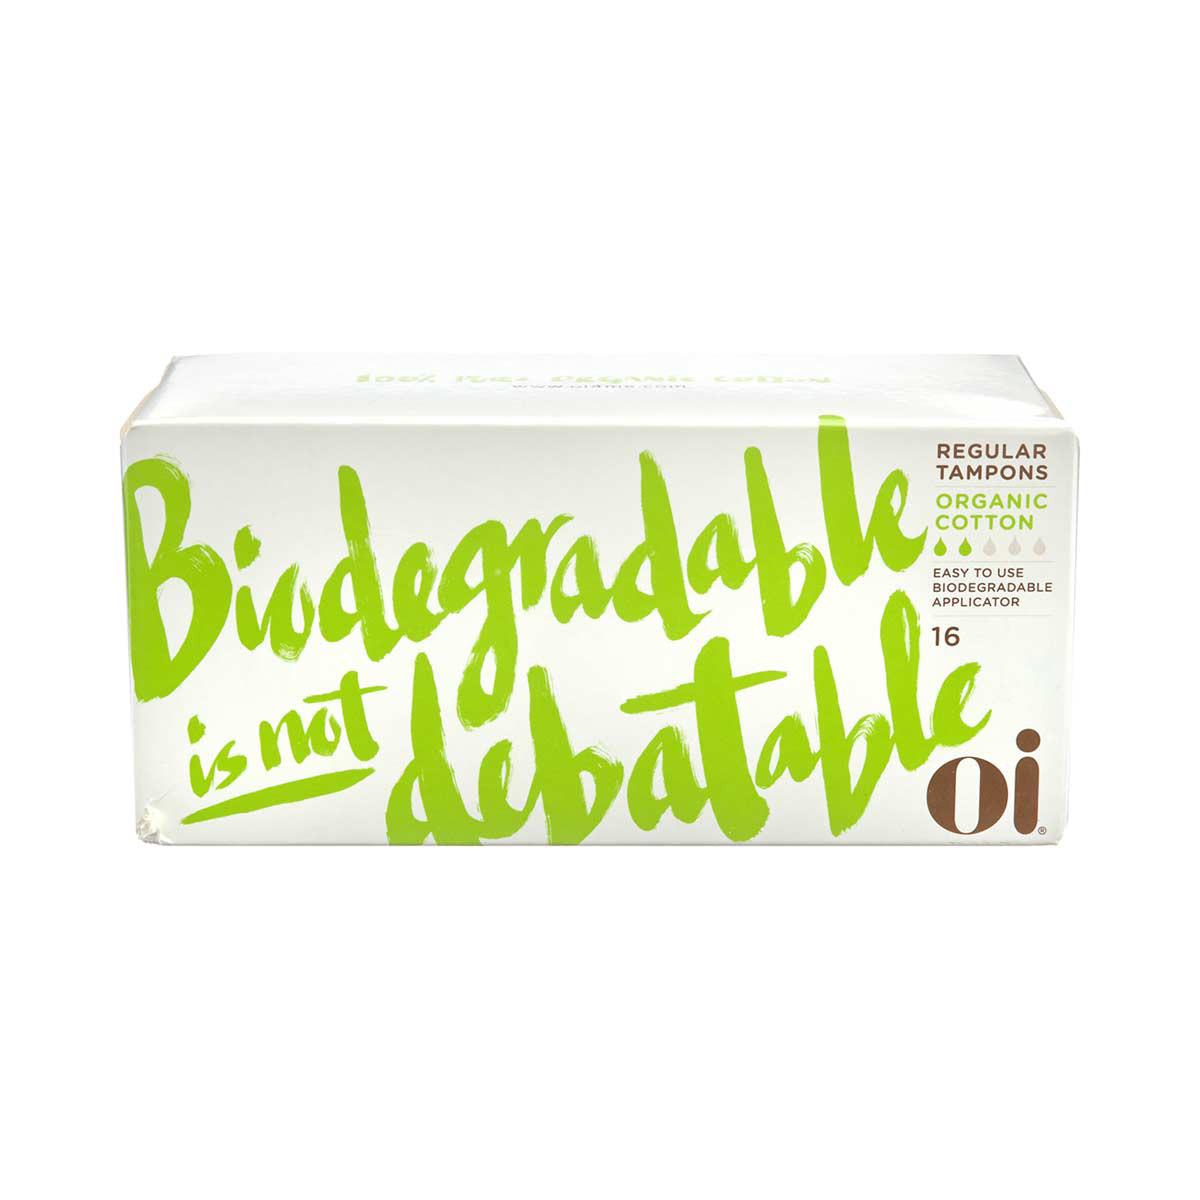 Biodegradable Tampons- Regular (16 Tampons)